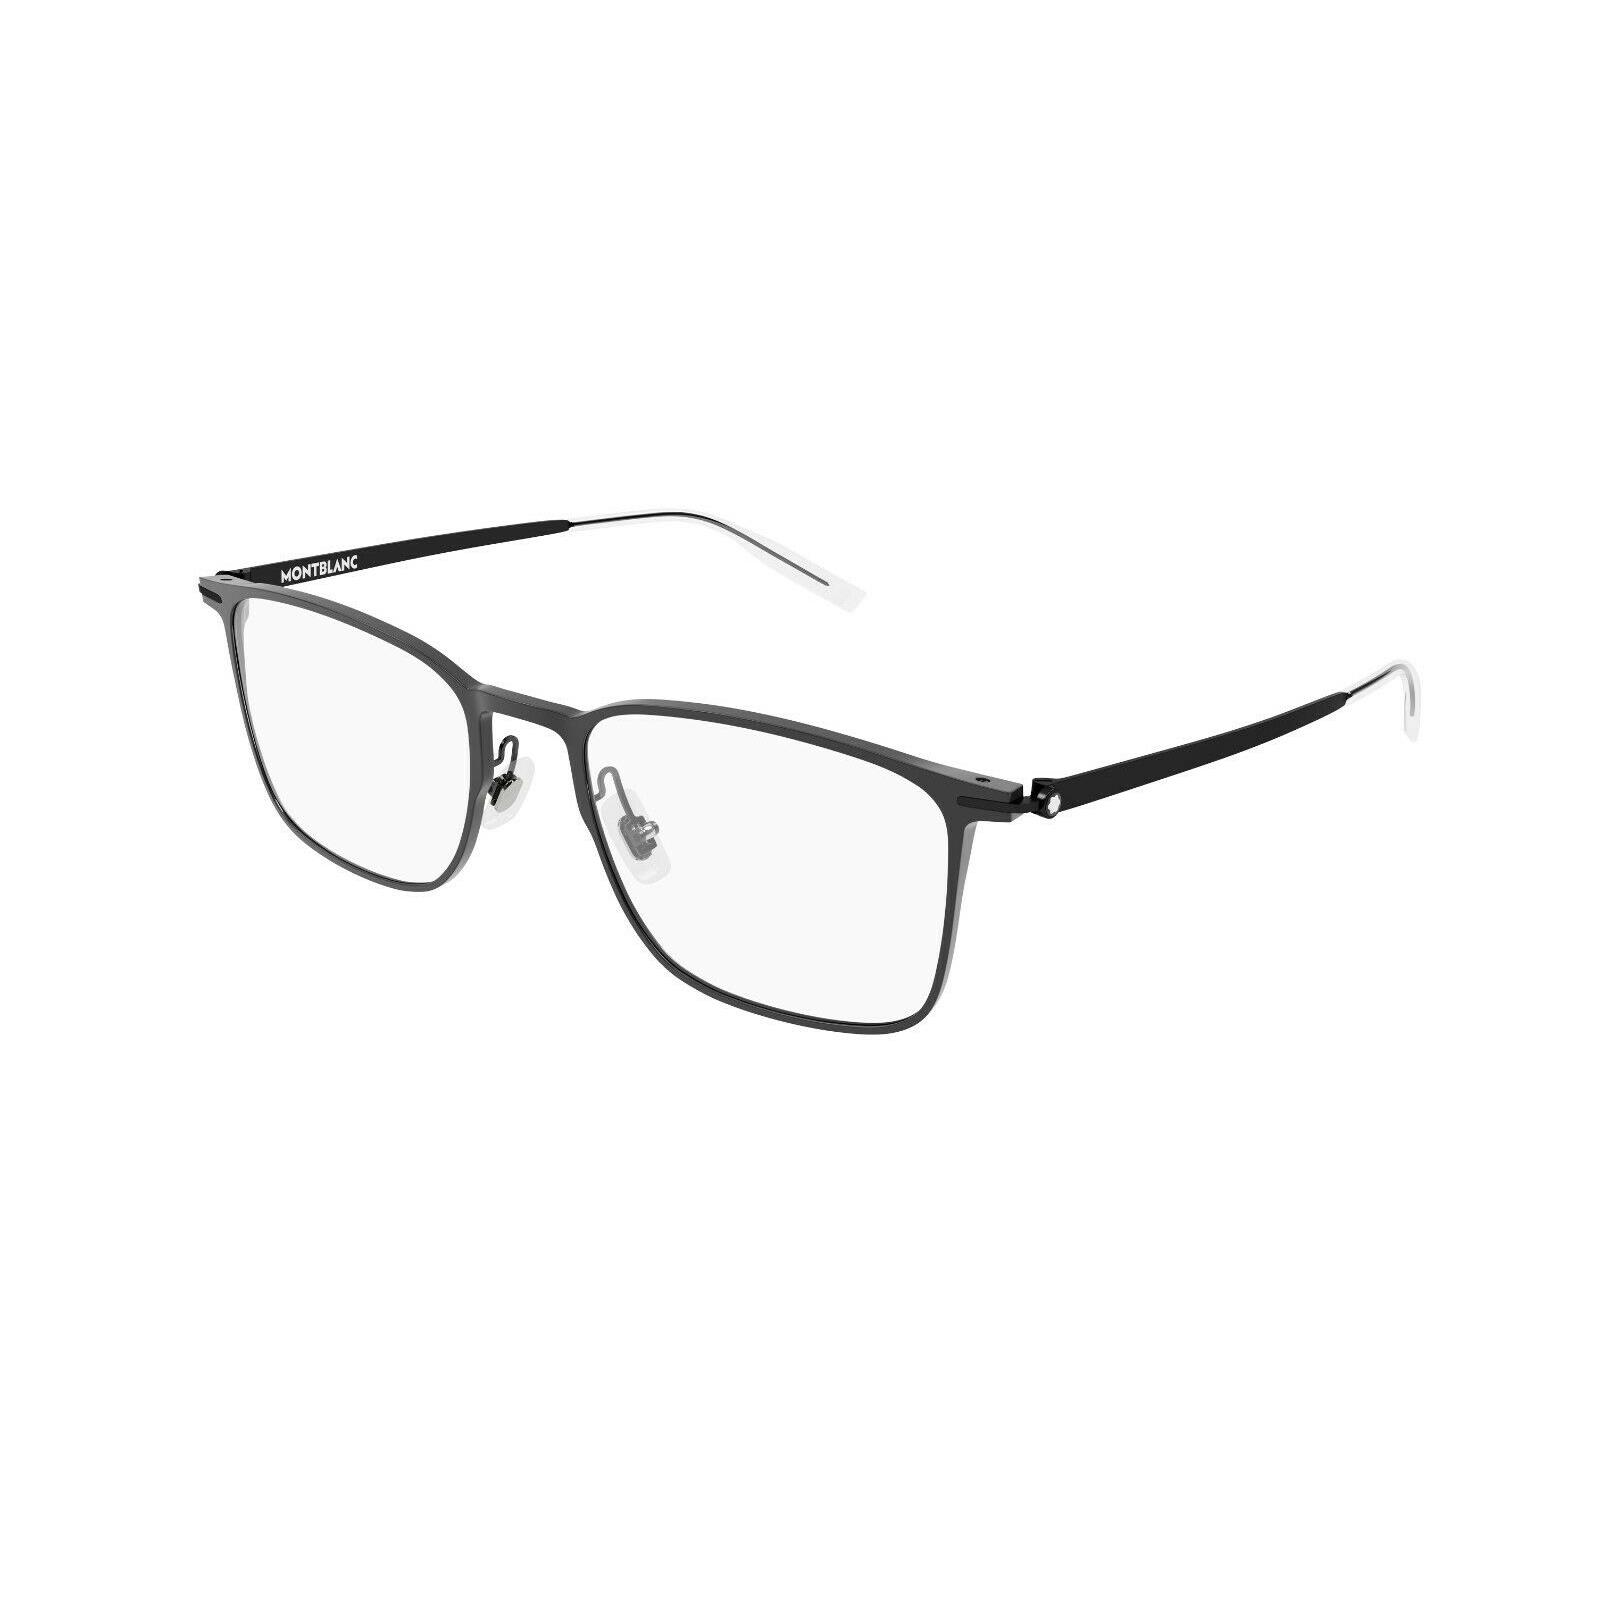 Montblanc Mont Blanc Eyeglasses MB0193o-001 Black Frame Clear Lenses